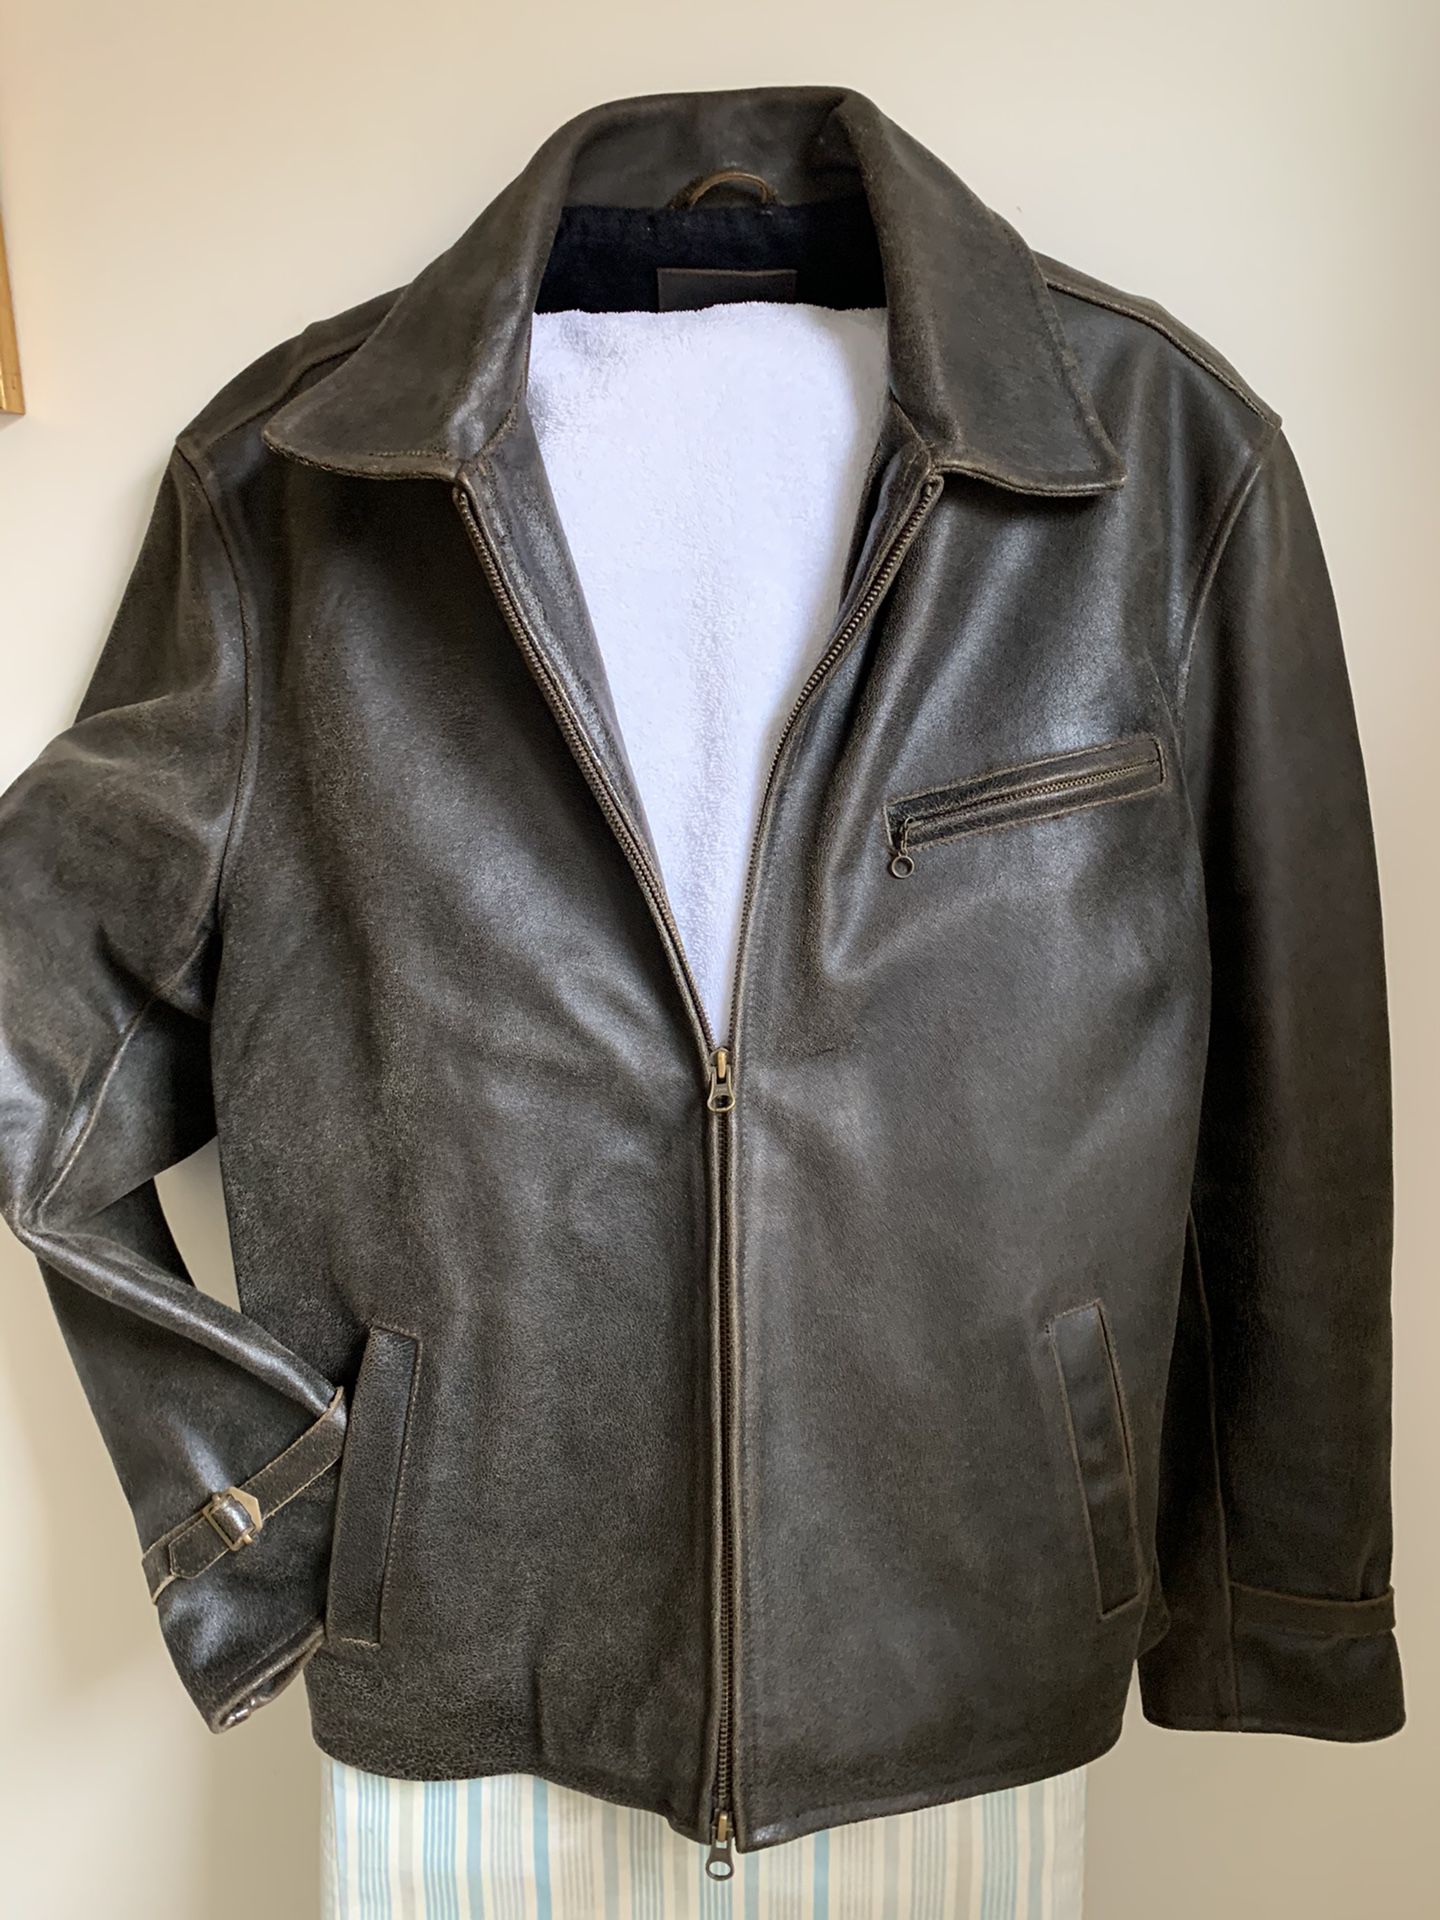 J Crew leather biker jacket